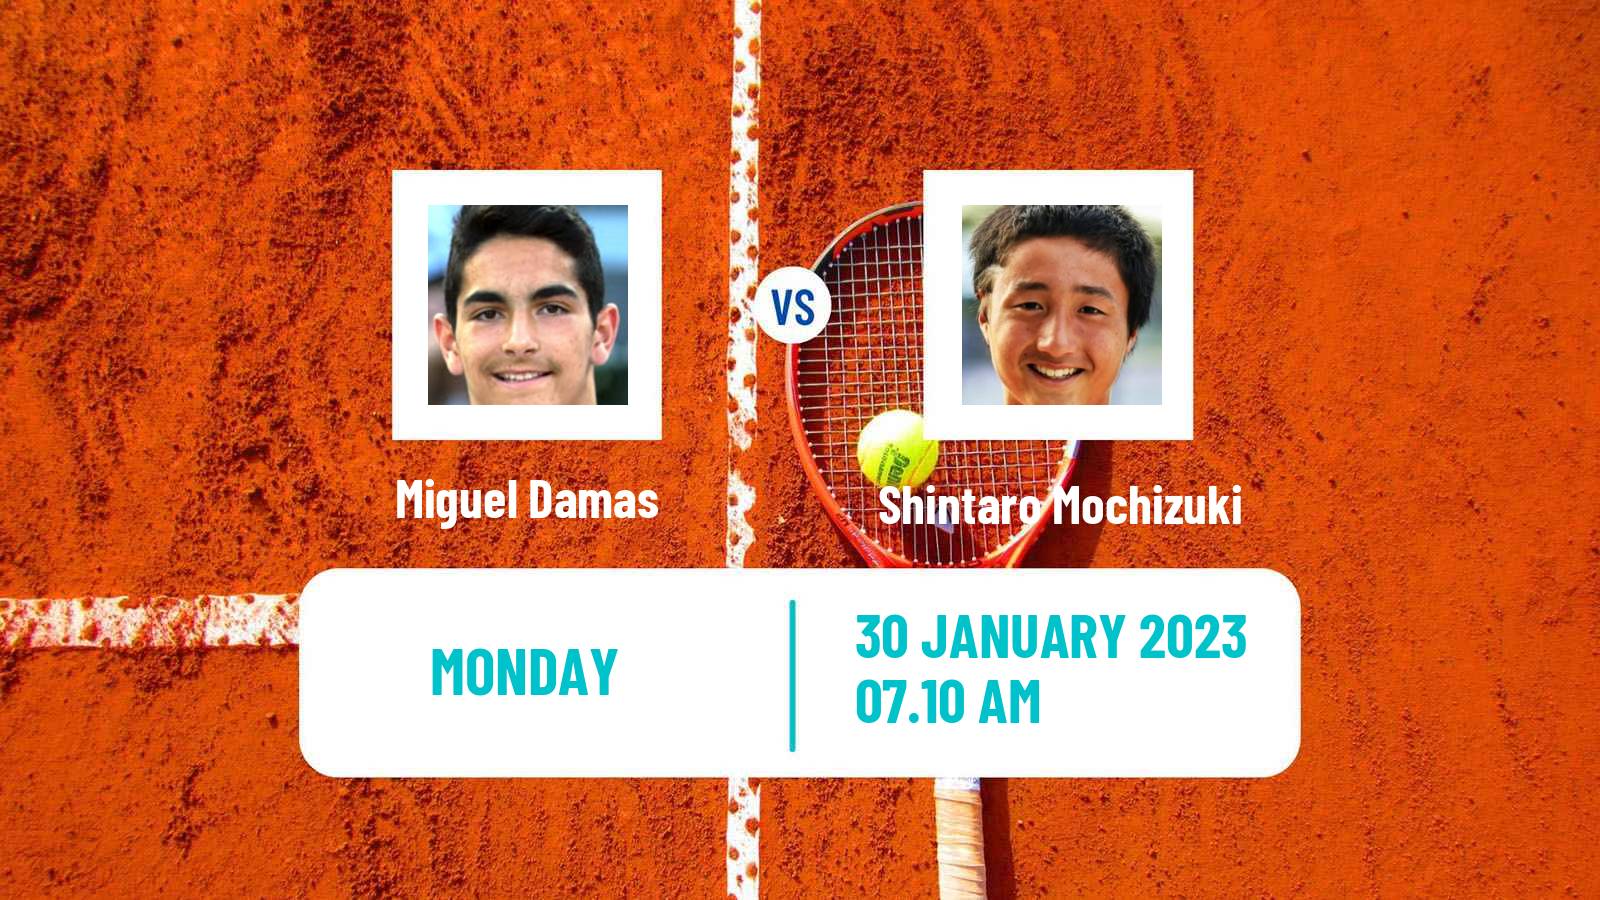 Tennis ATP Challenger Miguel Damas - Shintaro Mochizuki